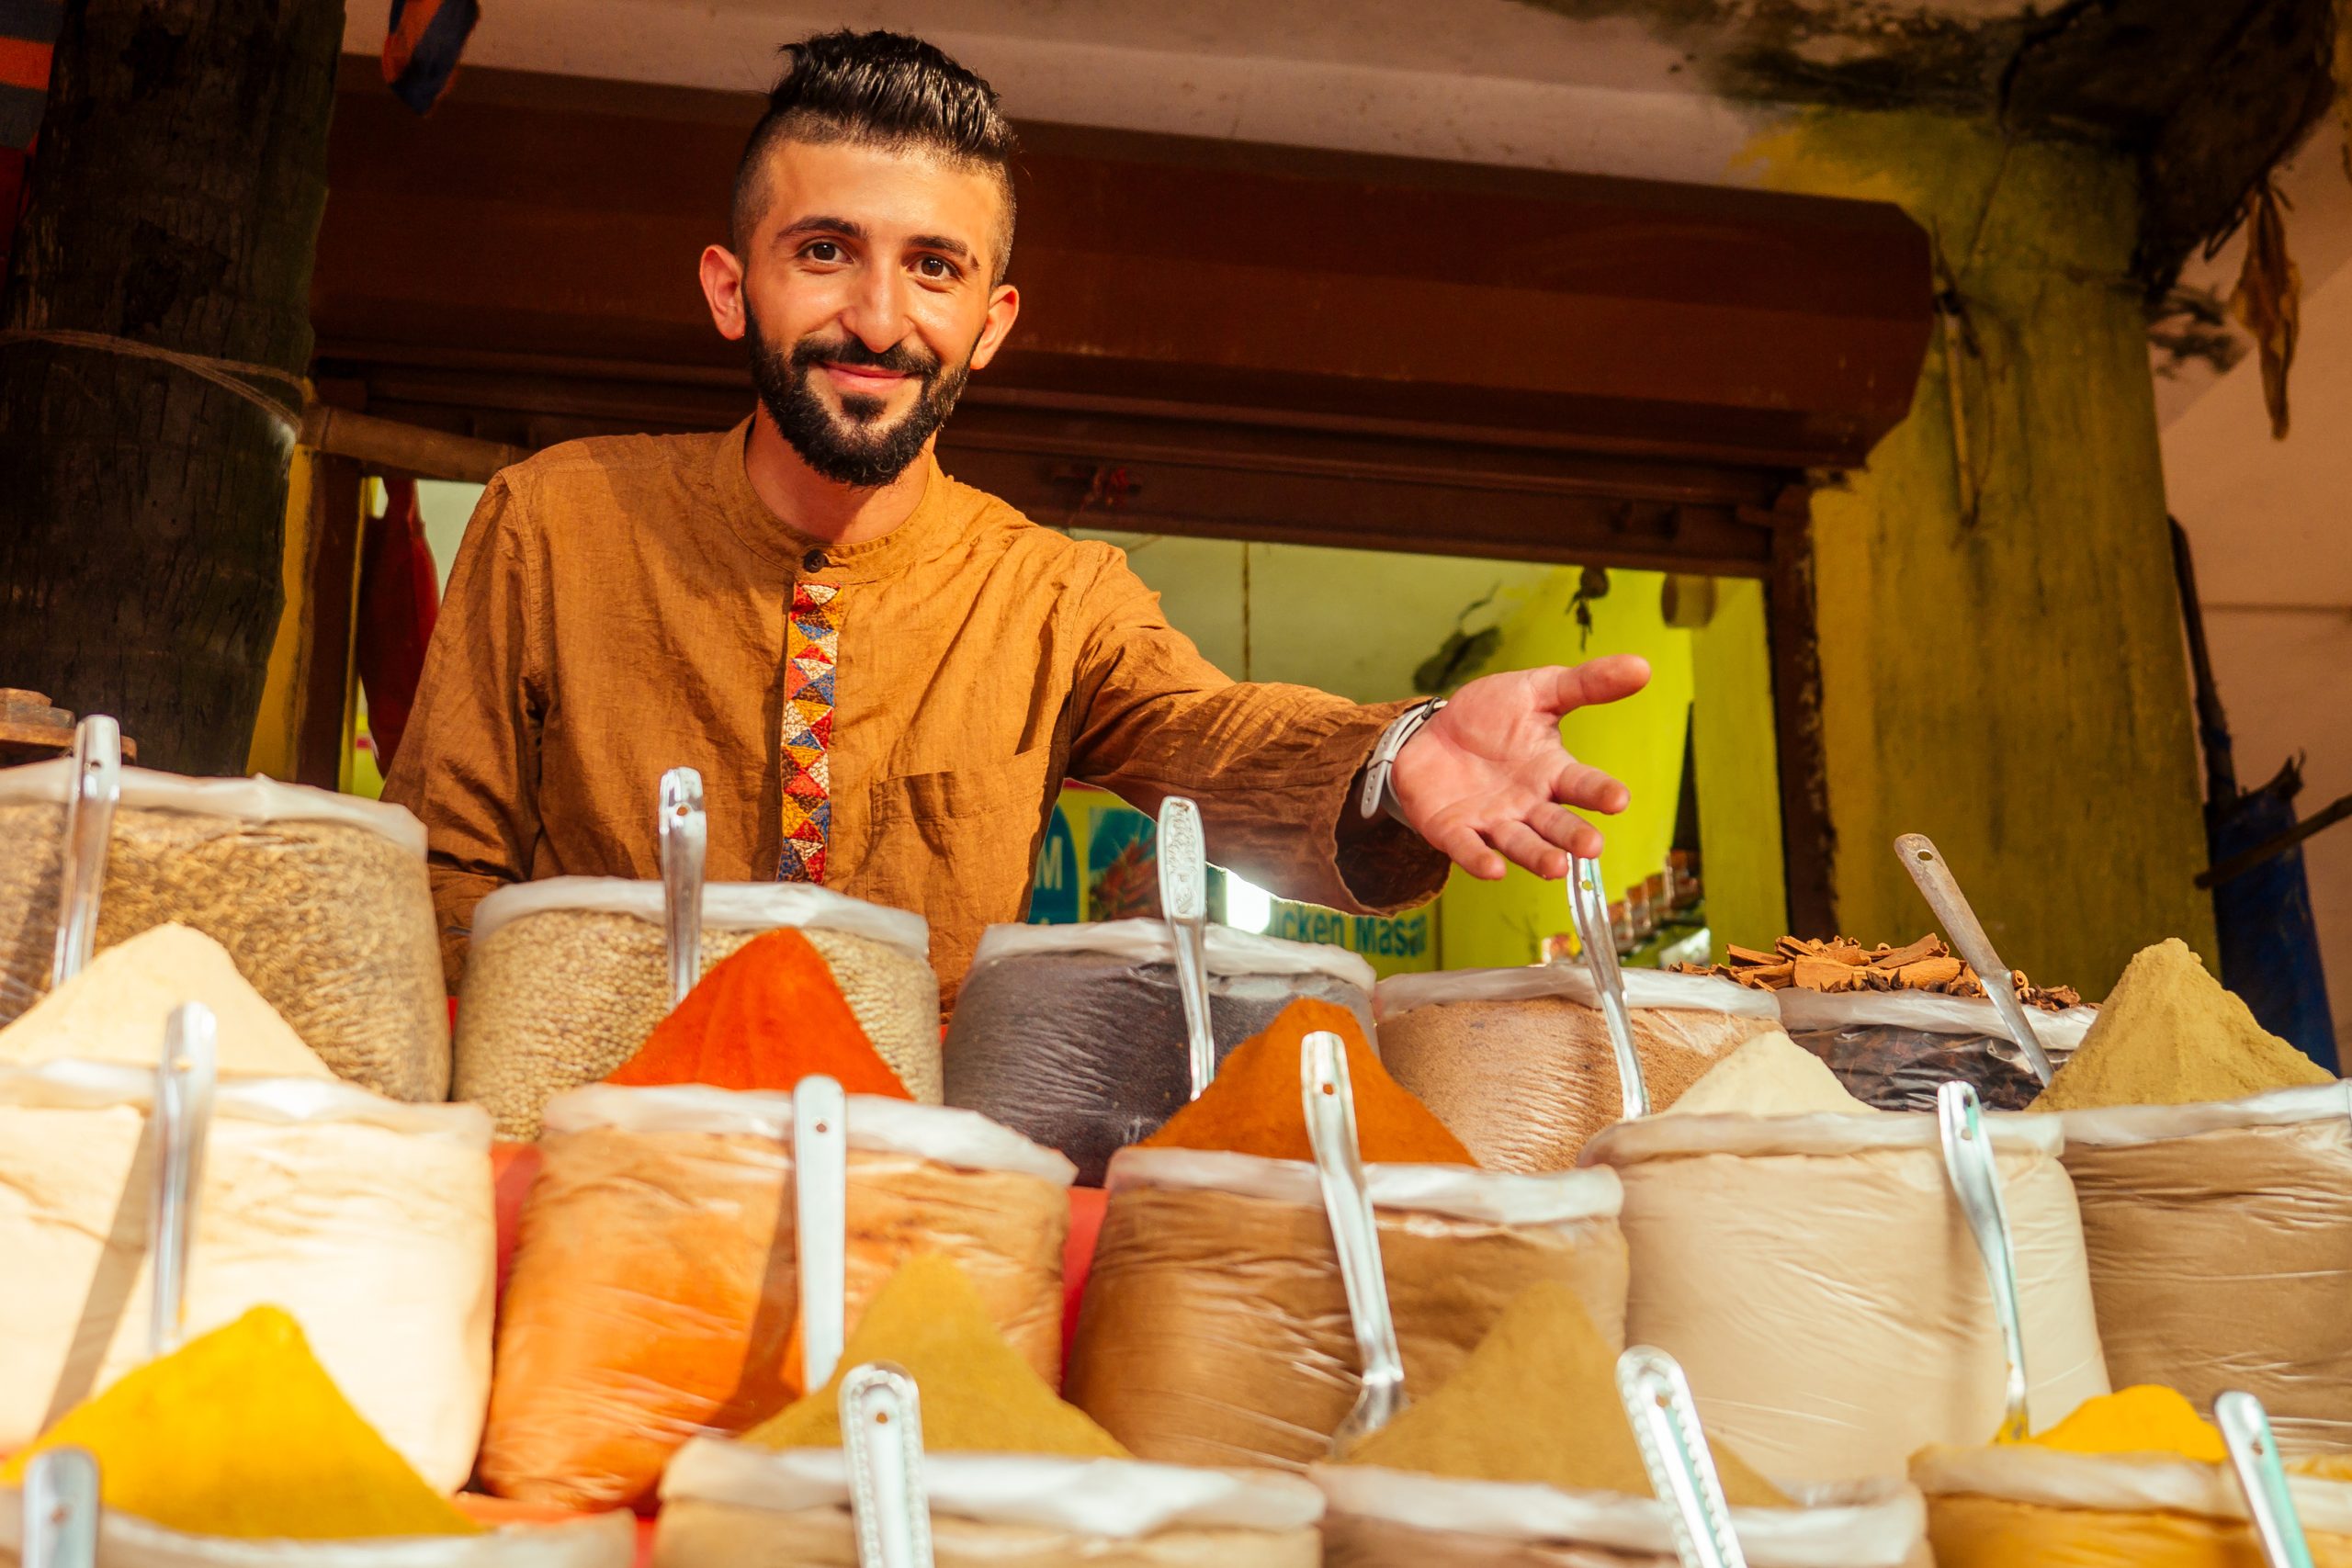 Istanbul spice merchant